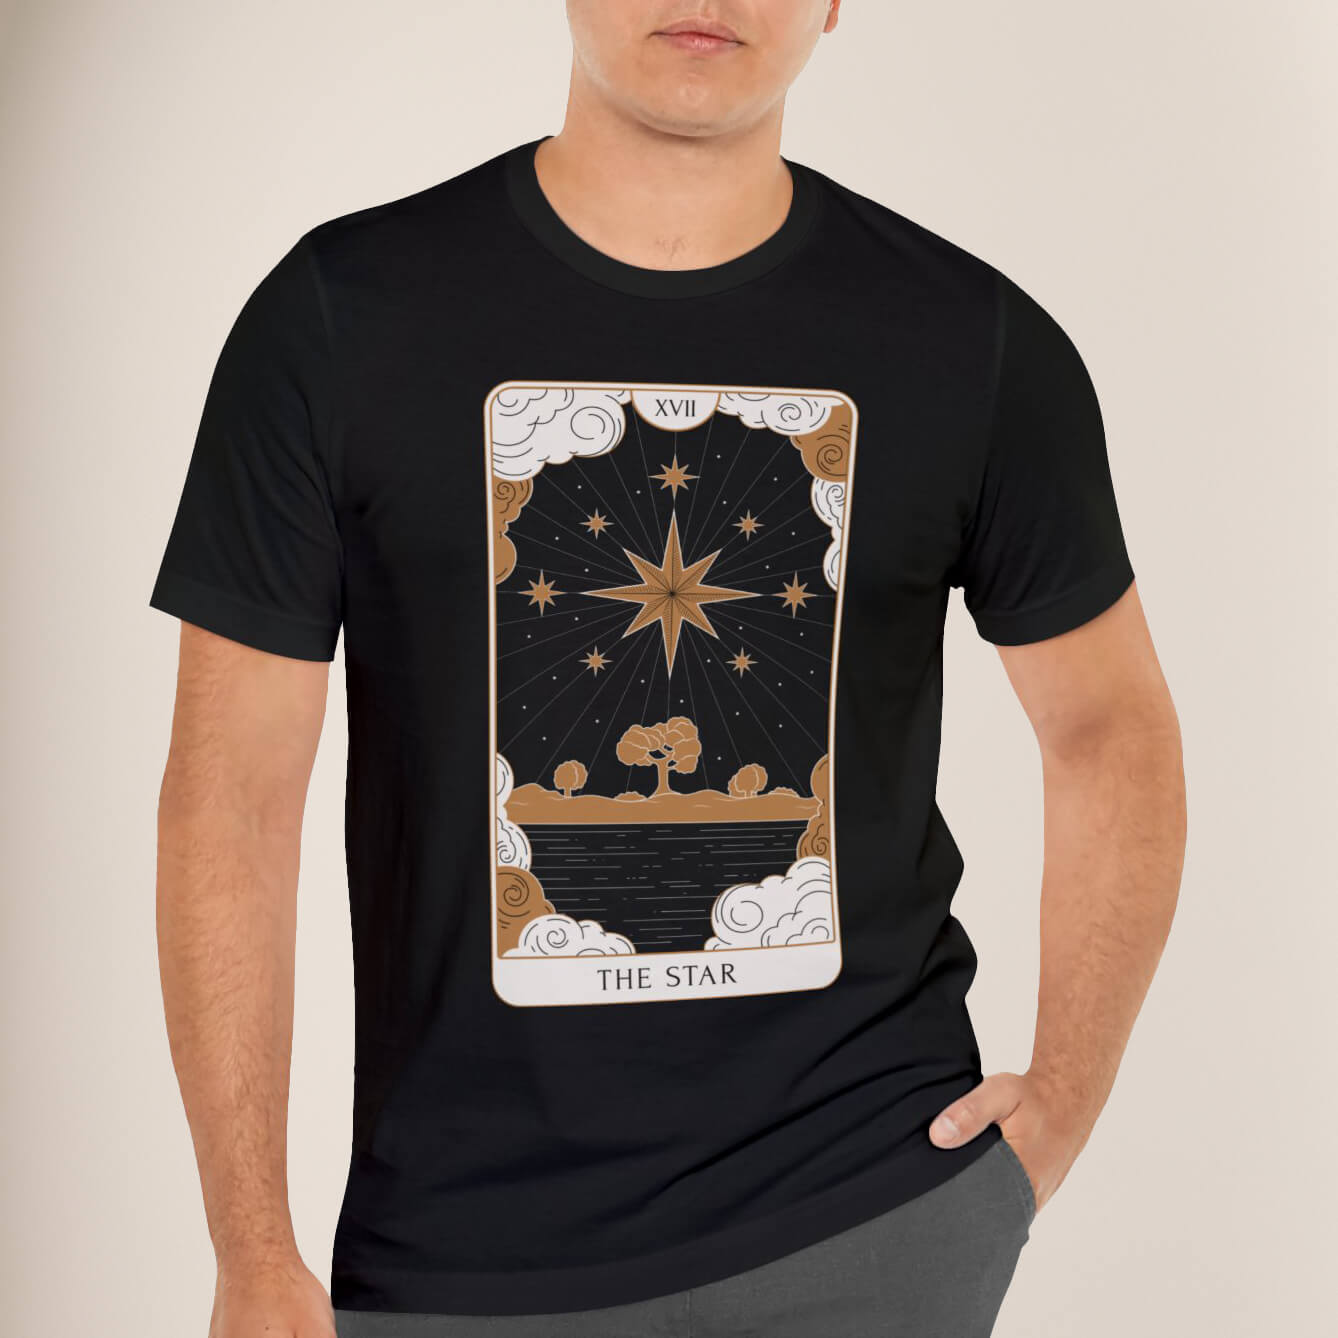 Stellar-Skeleton-Tarot-Cards-Tee-Tarot-Card-T-Shirt-The-Star